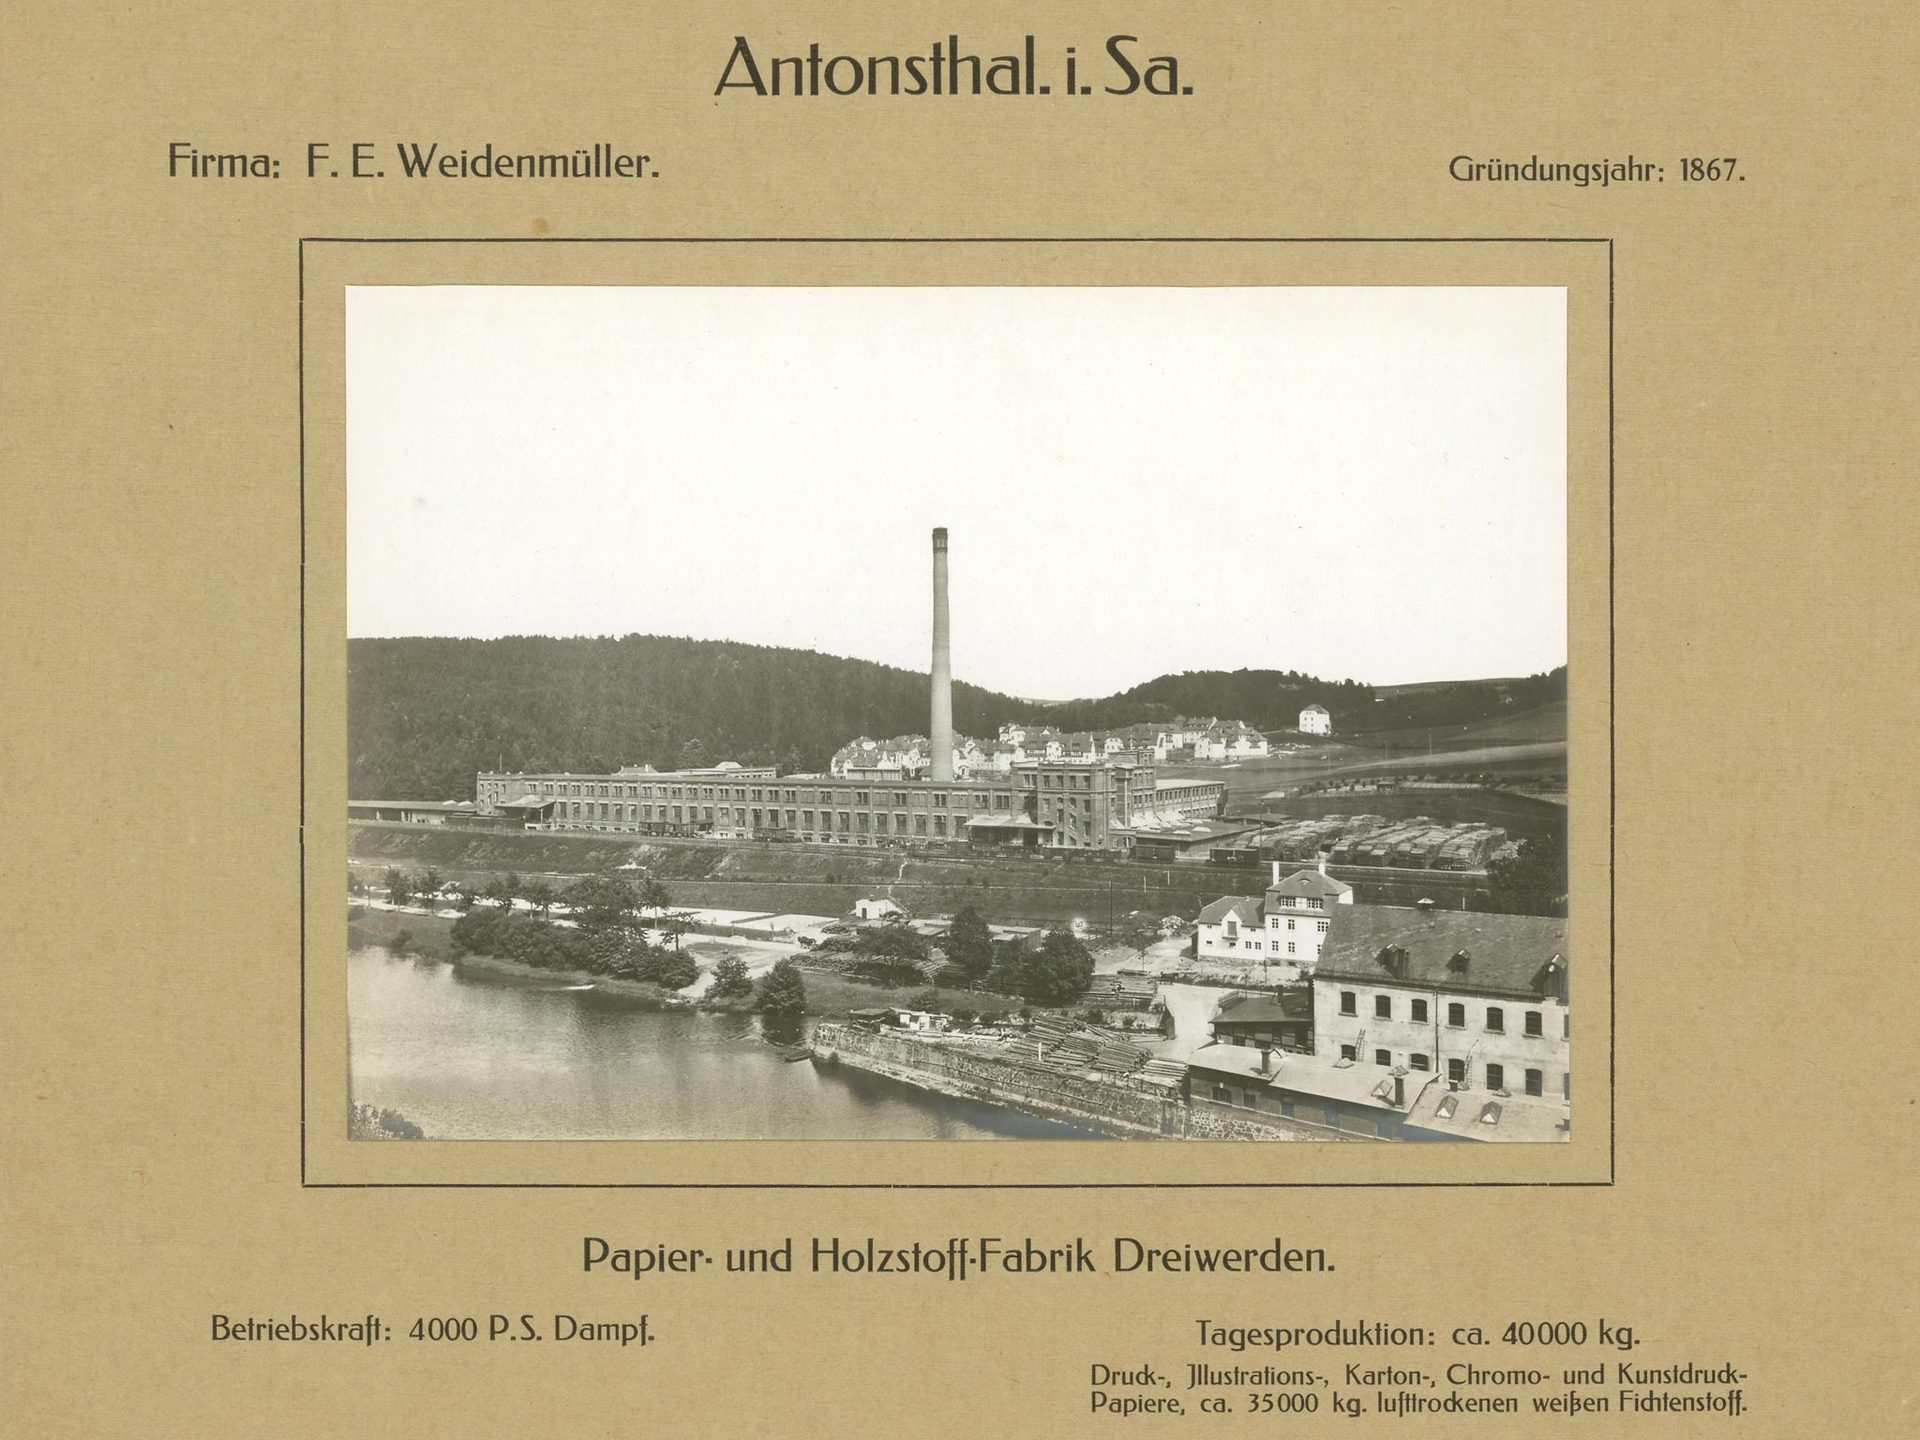 Papier- und Holzstoff-Fabrik Dreiwerden der Firma F. E. Weidenmüller